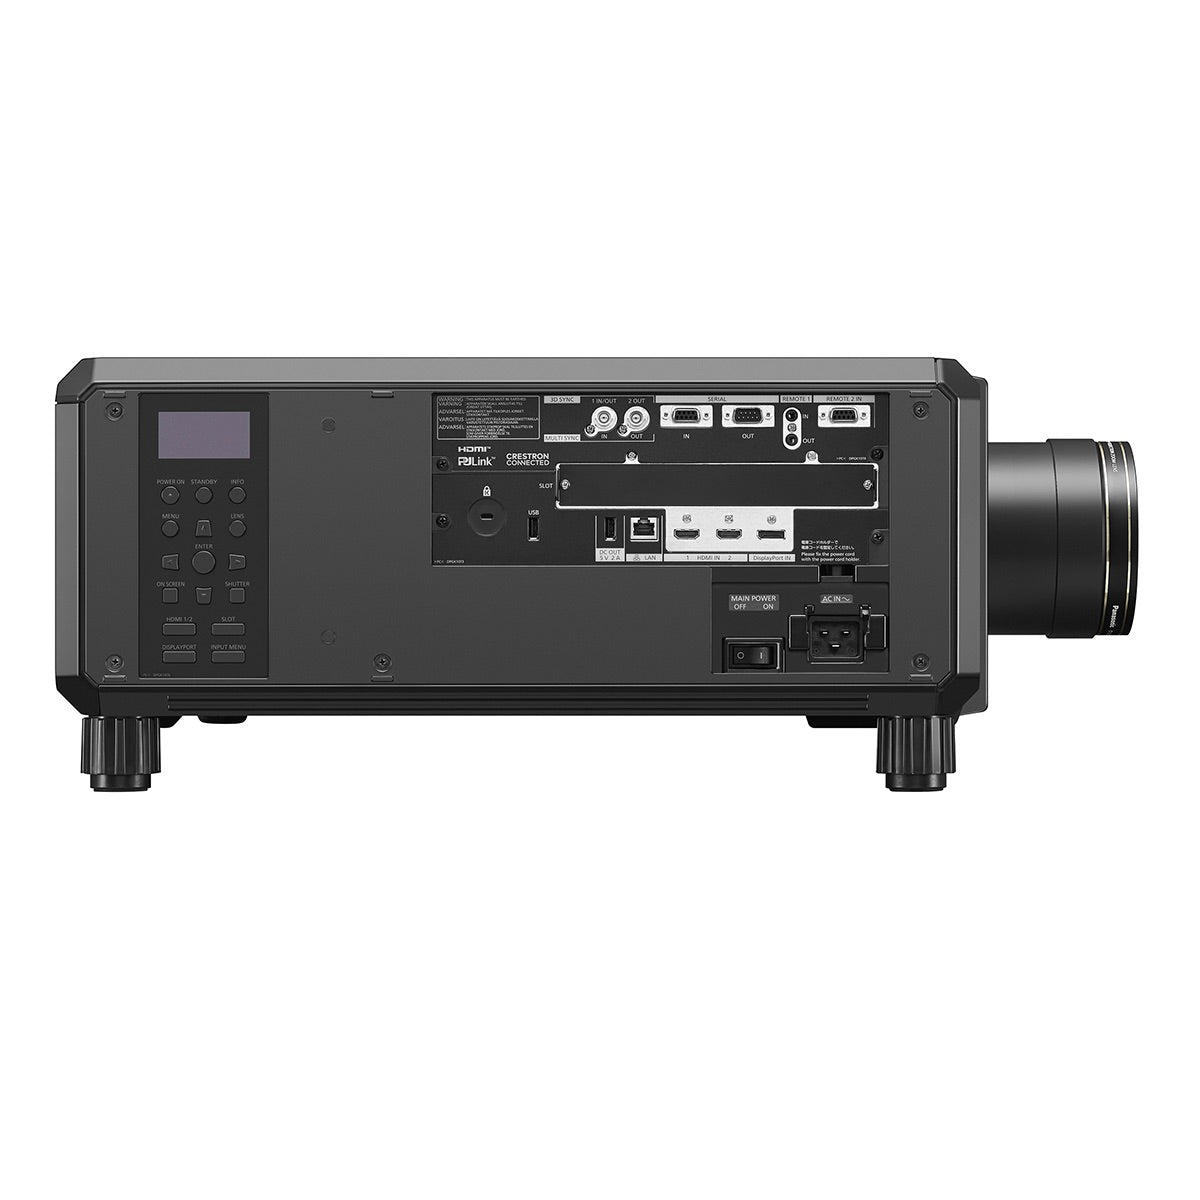 Panasonic PT-RZ17KU - 3-Chip DLP WUXGA Laser Projector (no lens), right side